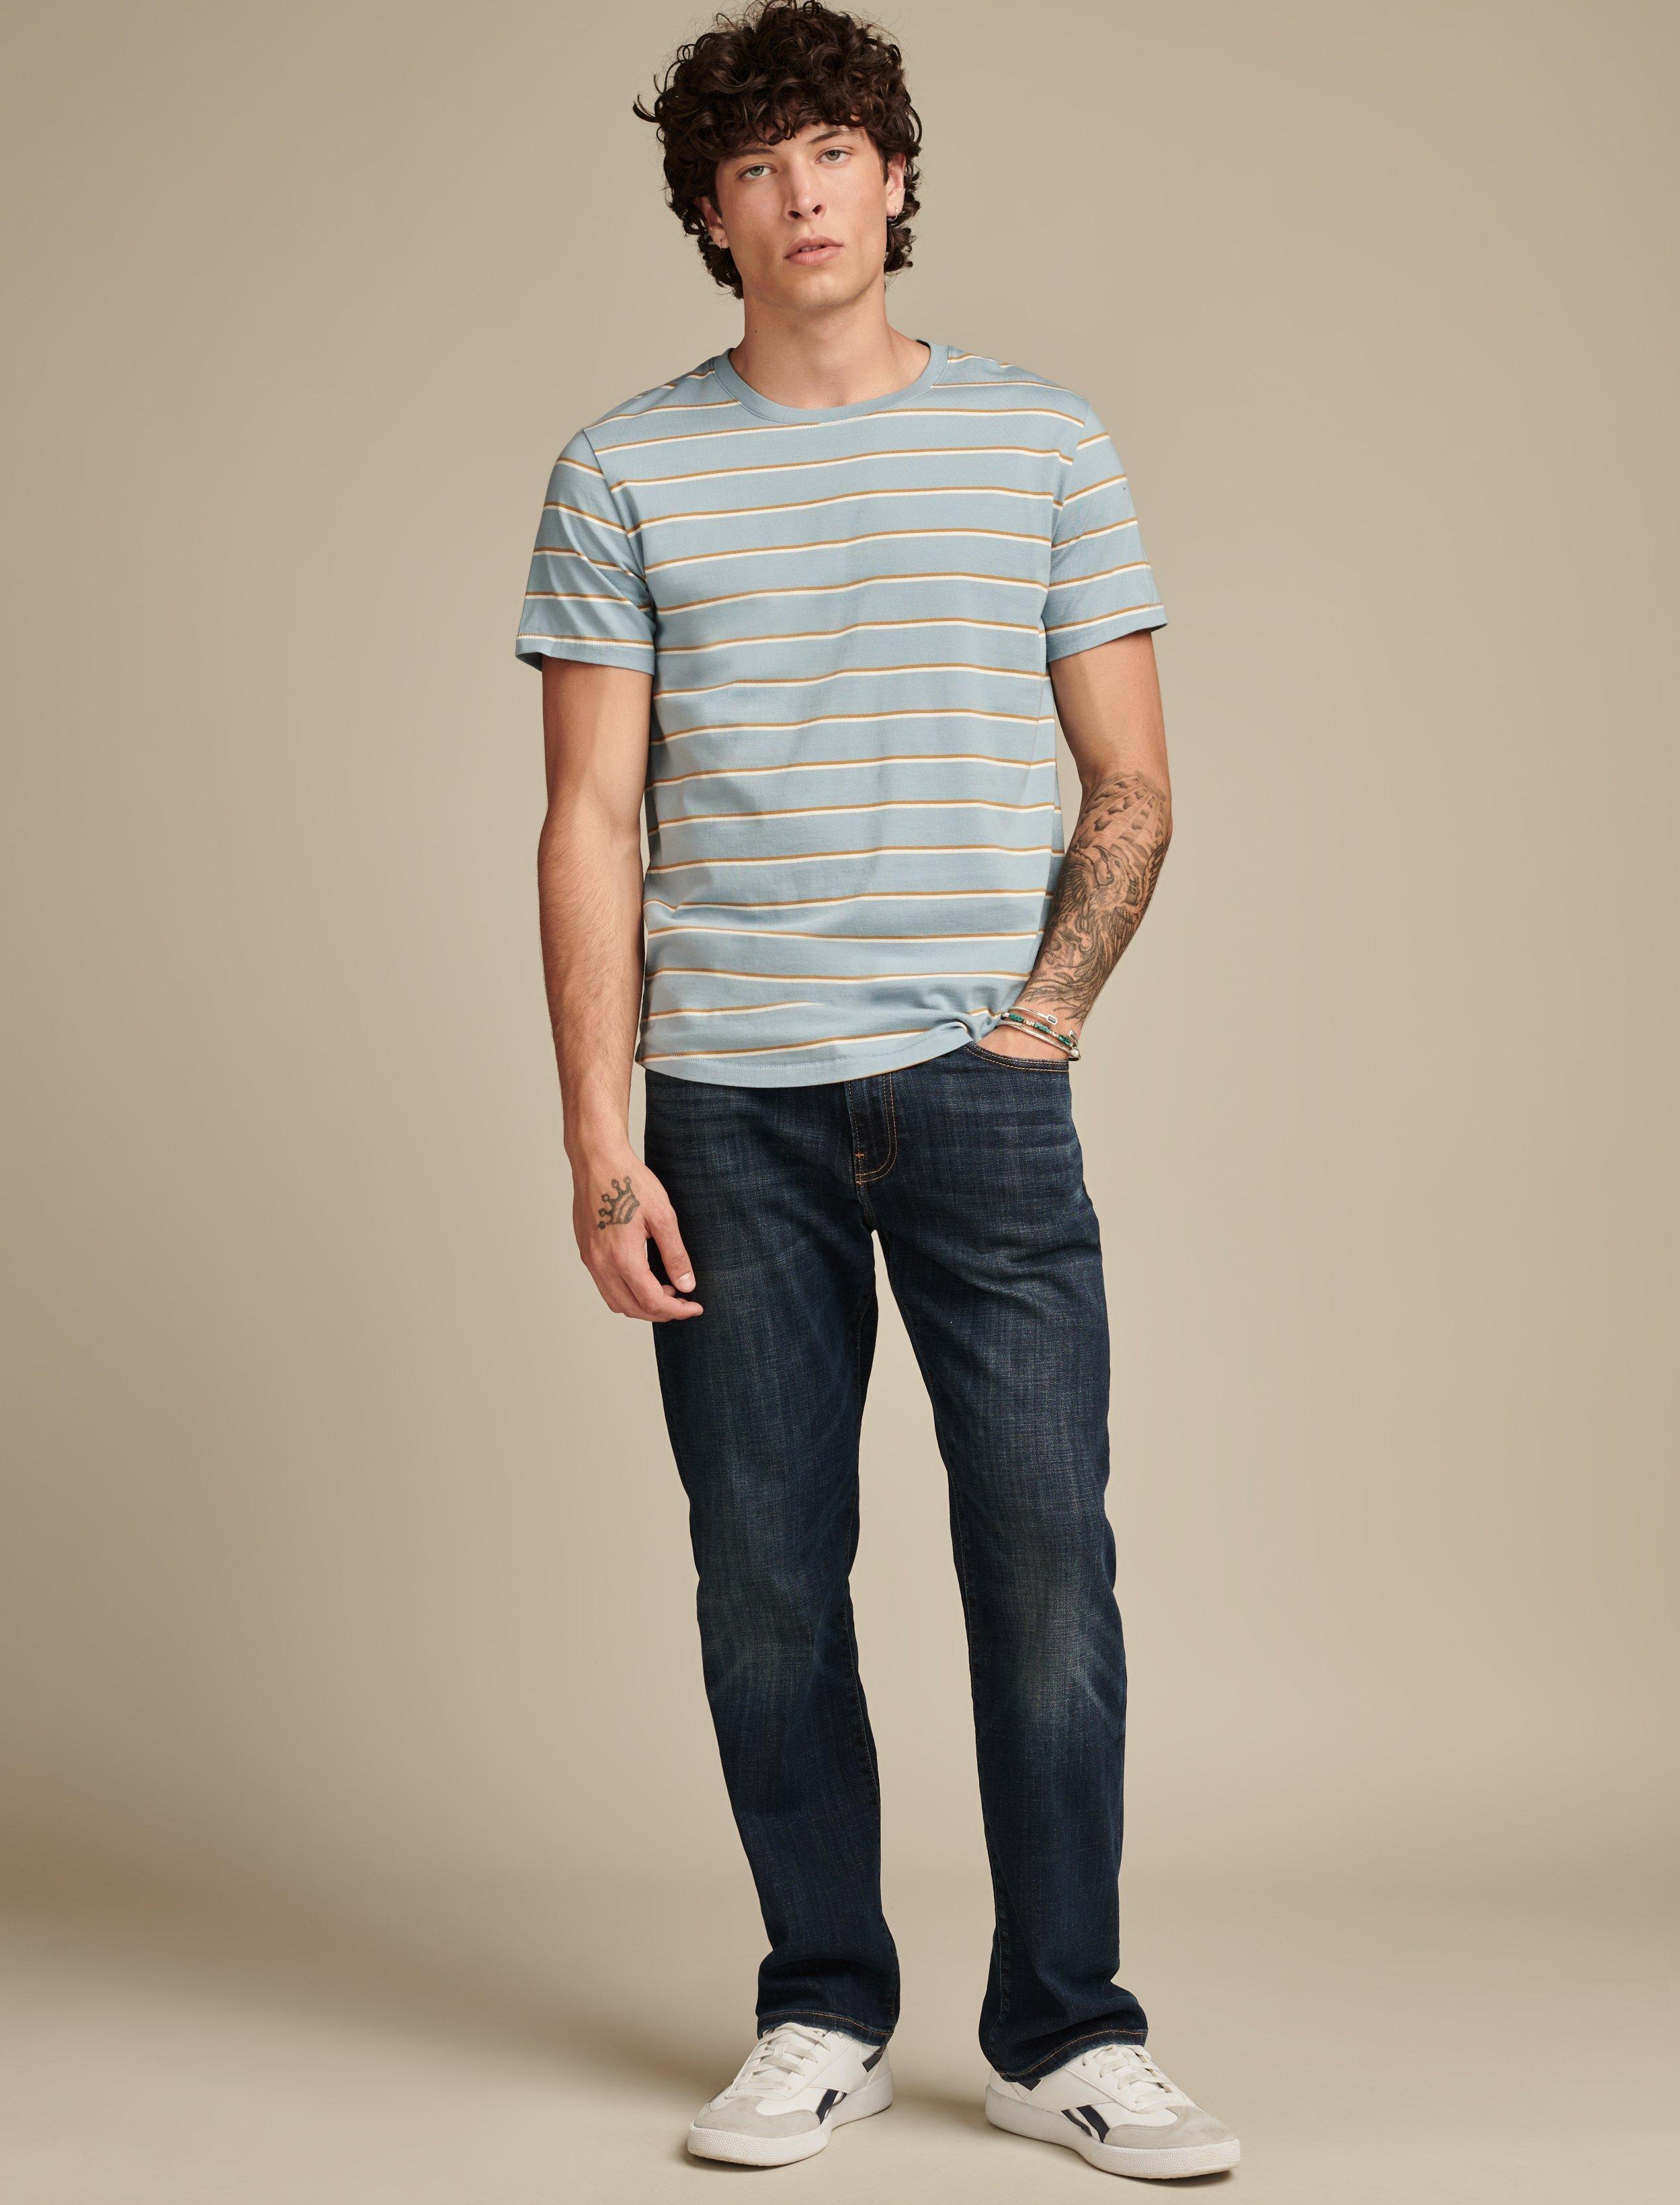 lucky brand jeans website